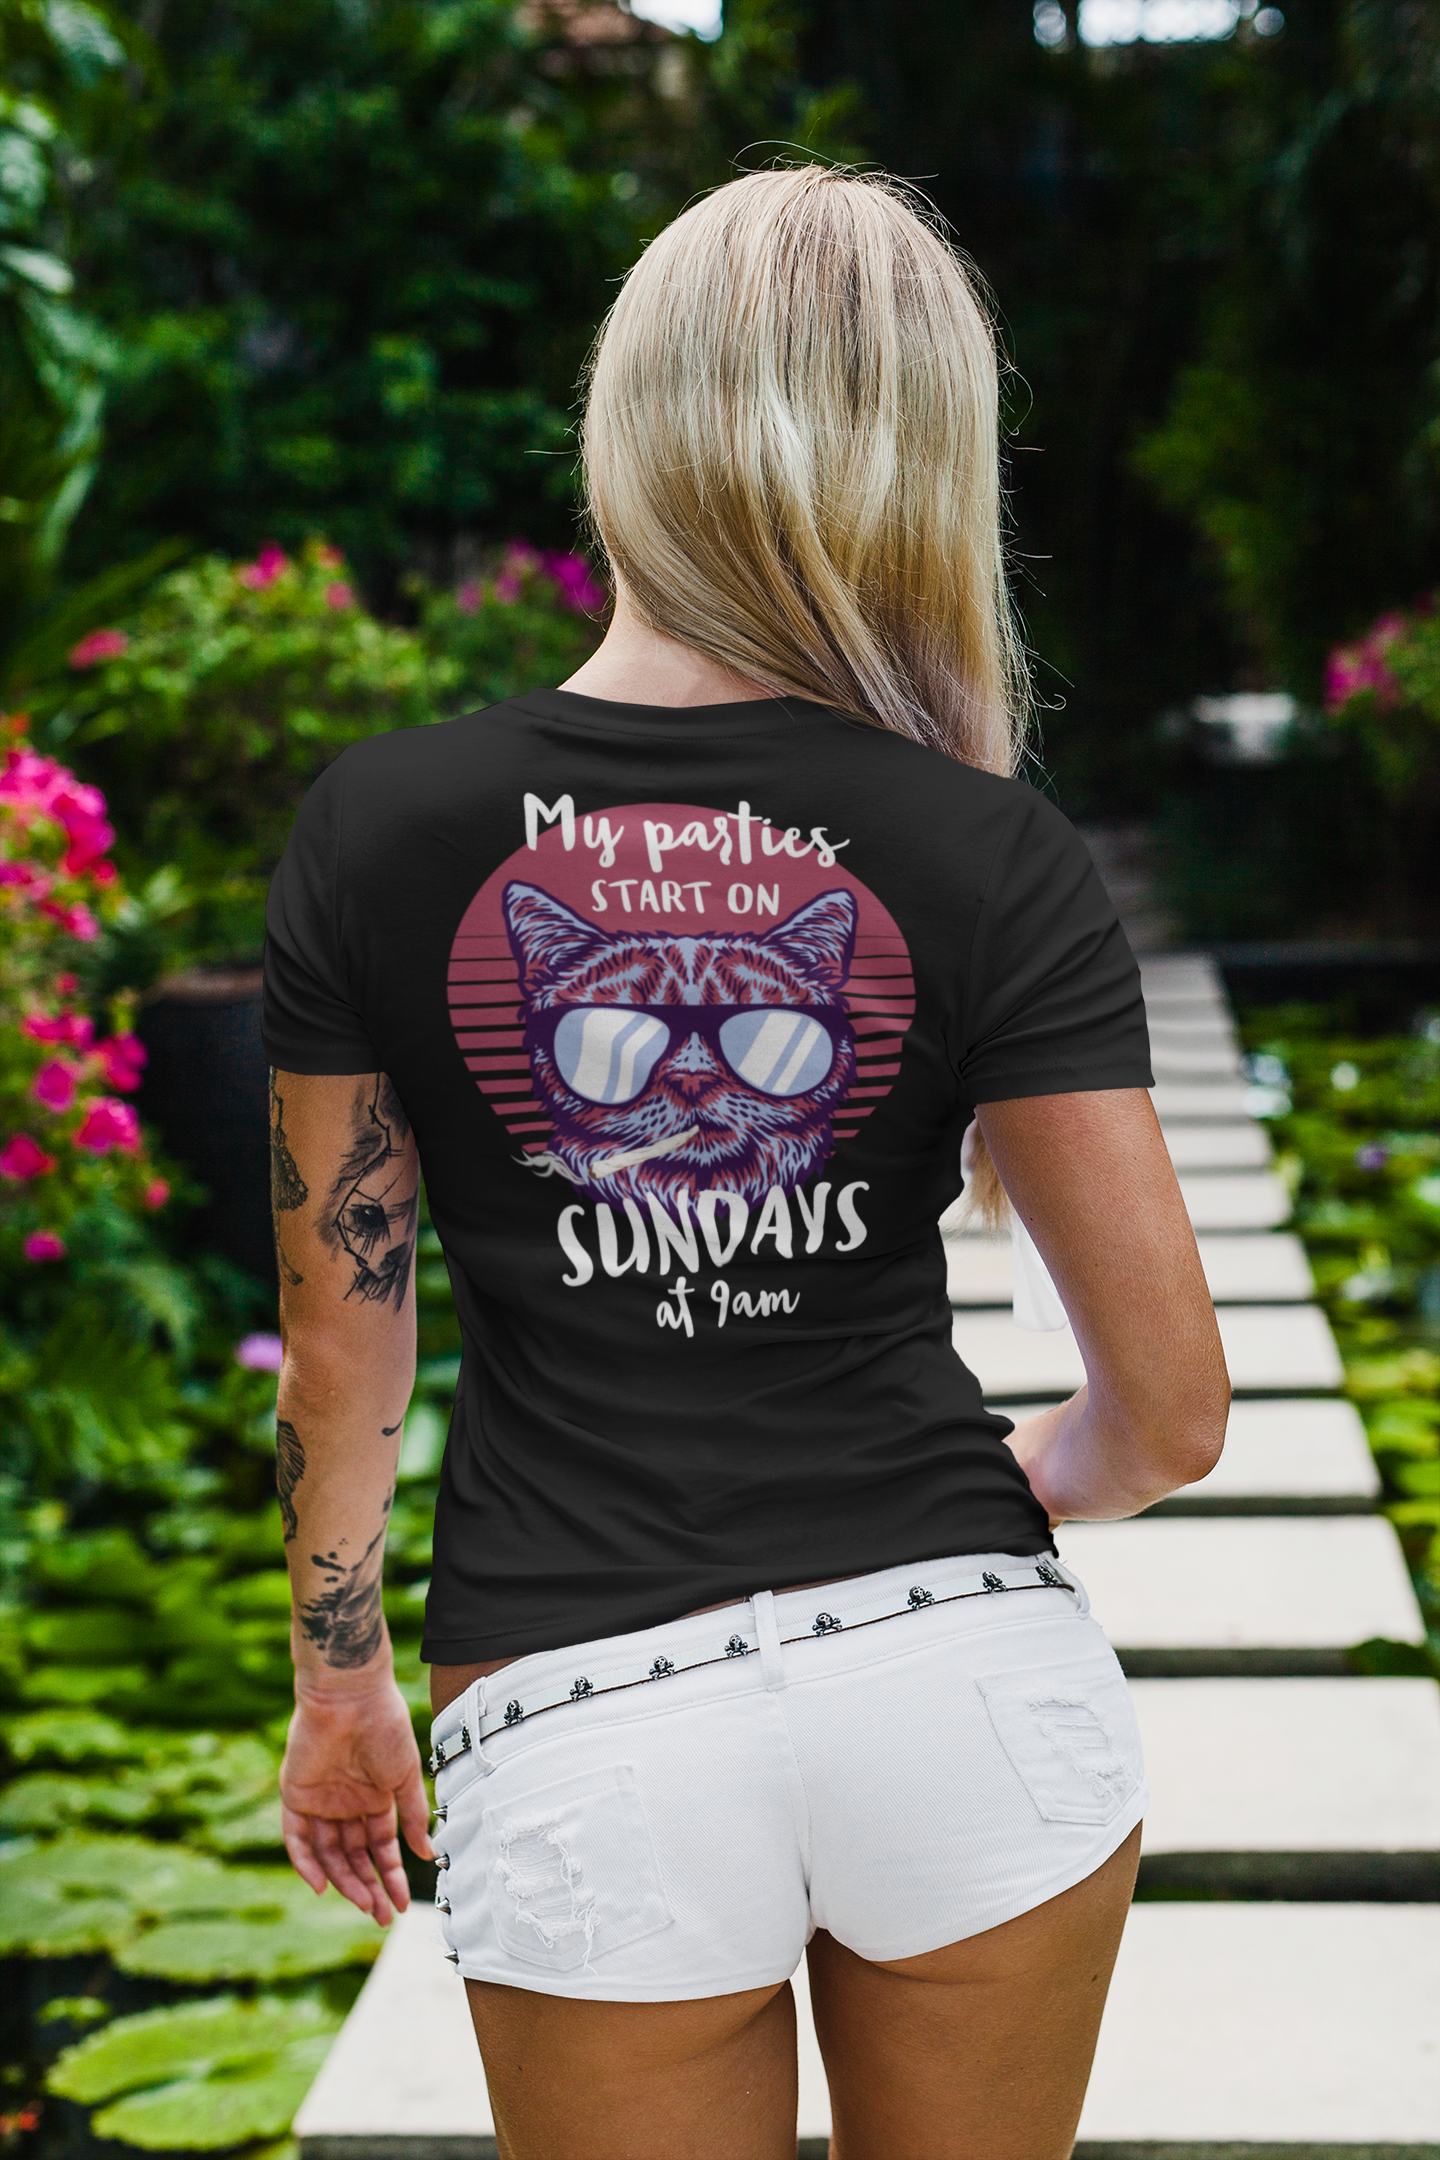 My parties start on Sundays at 9am - Unisex T-Shirt - CatsOnDrugs